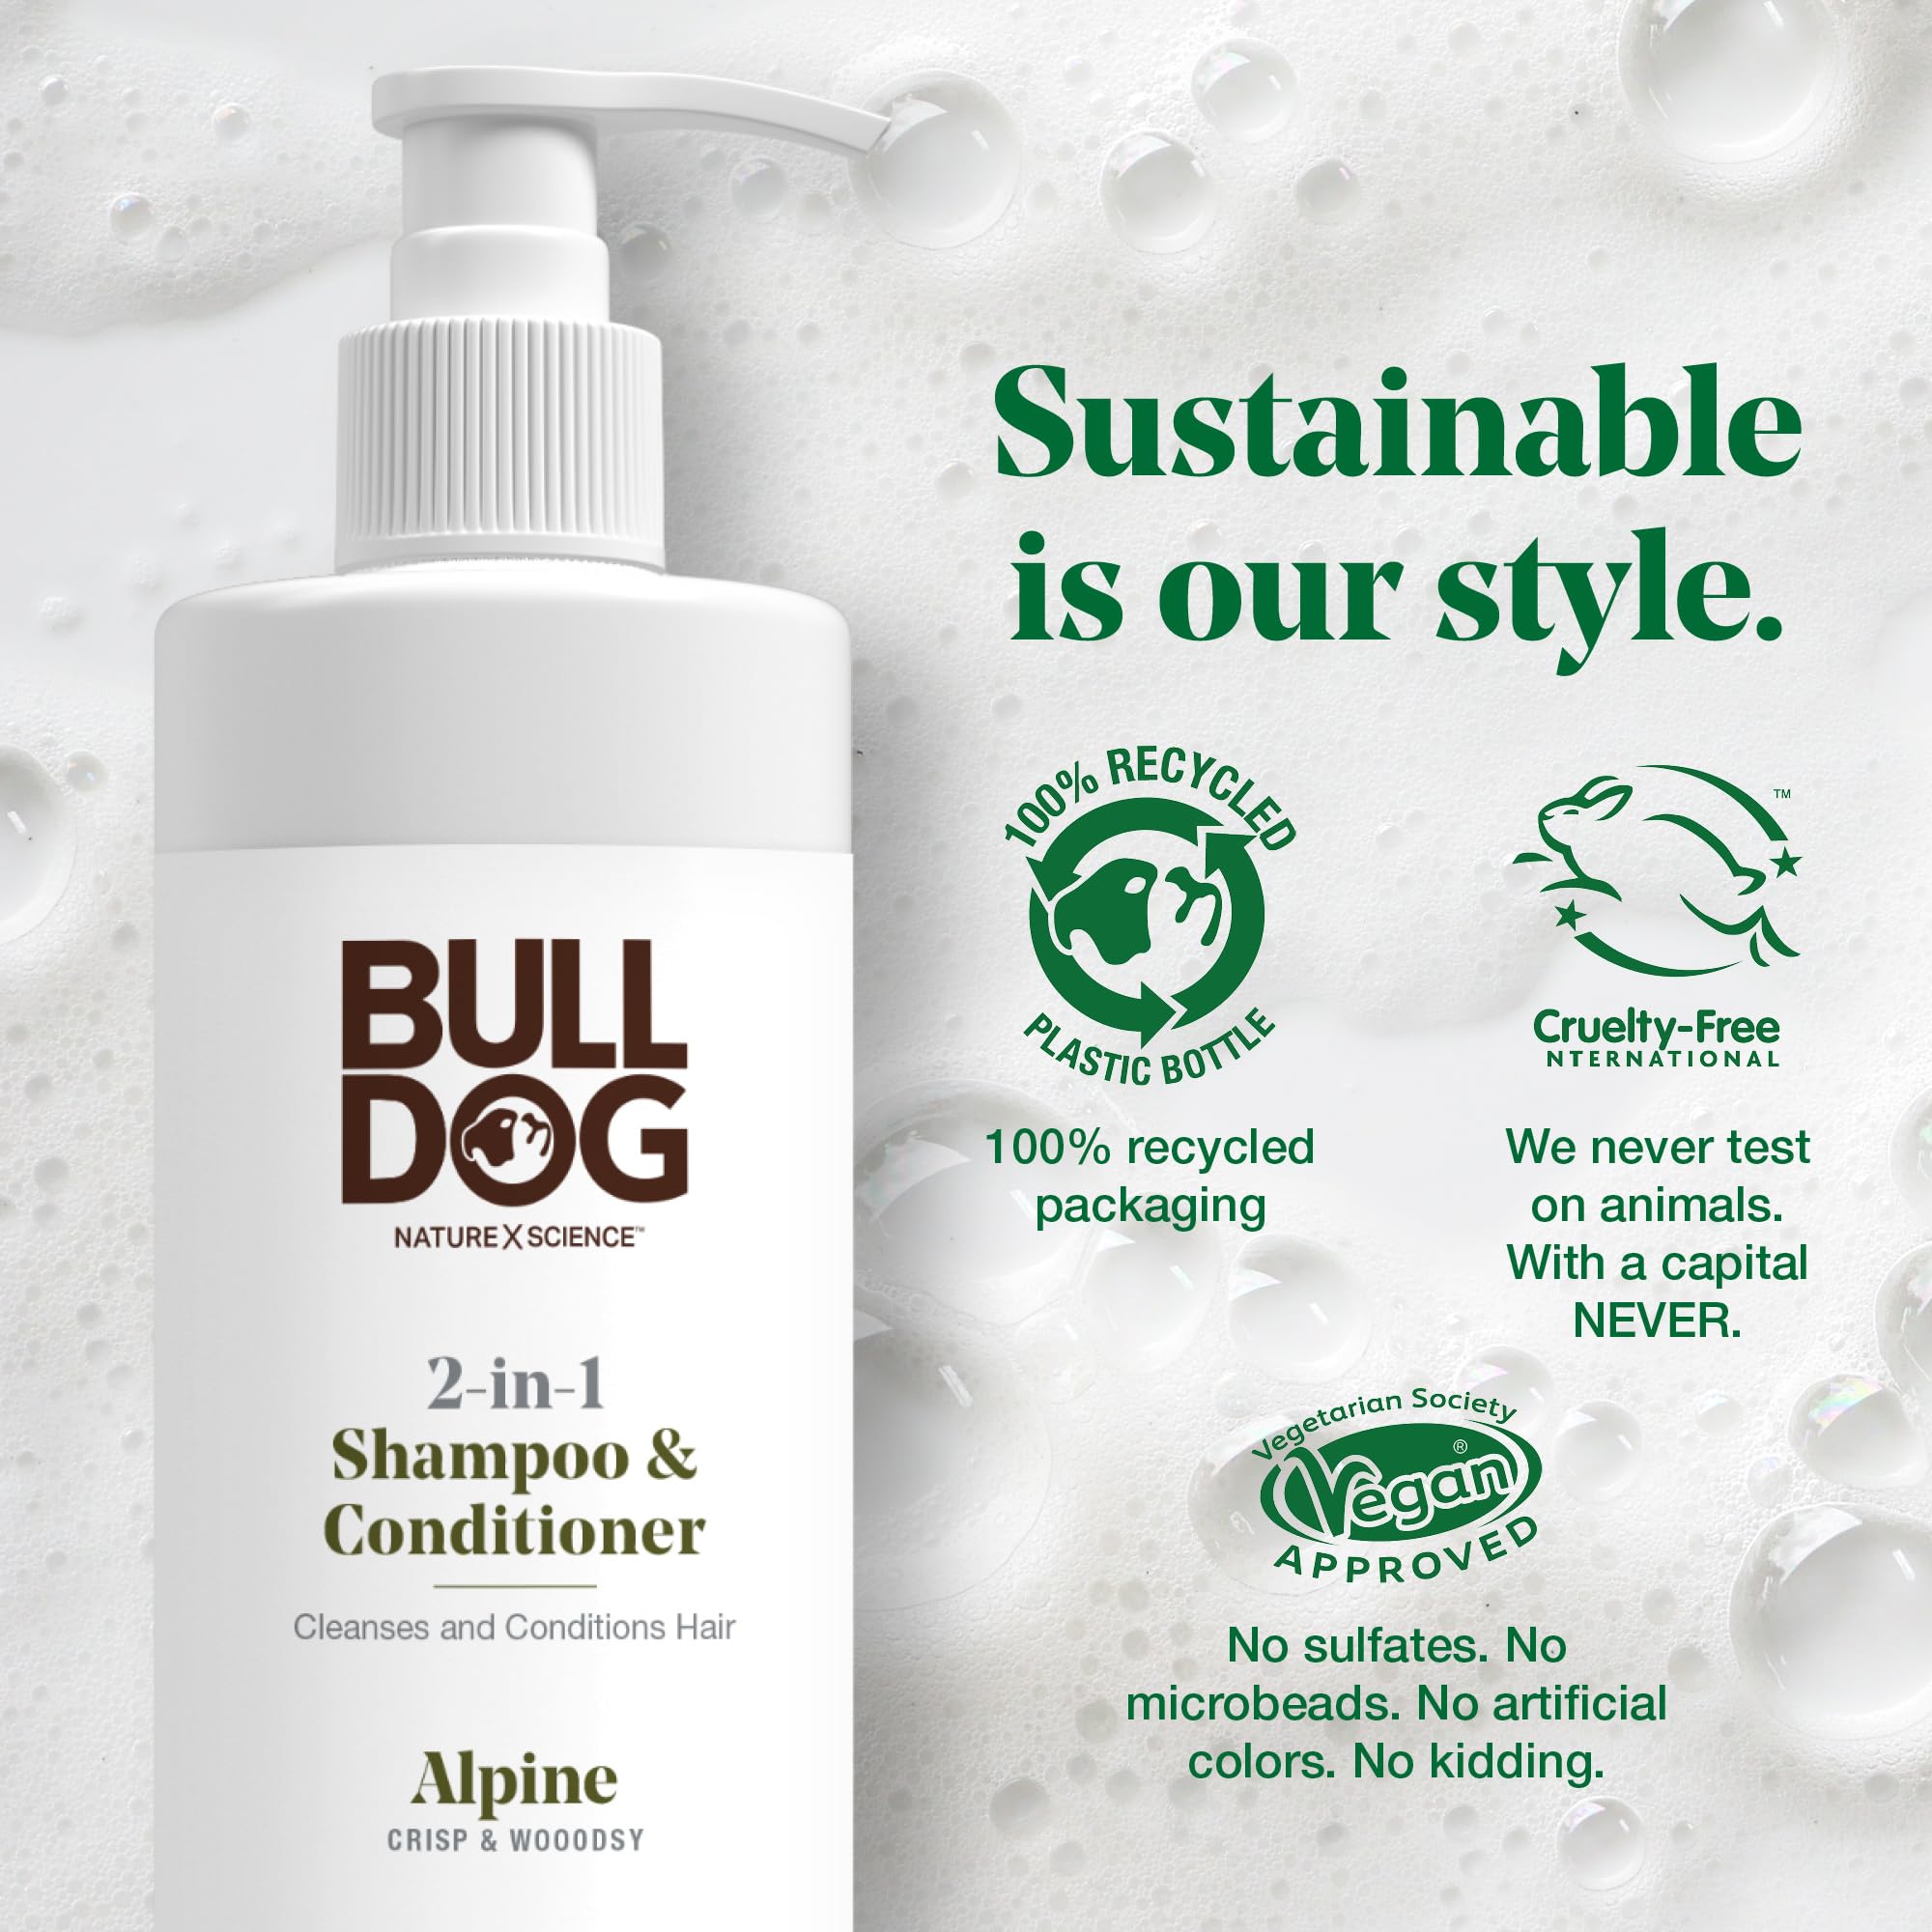 BULLDOG 2-in-1 Shampoo and Conditioner, Alpine, 12 Fluid Ounces